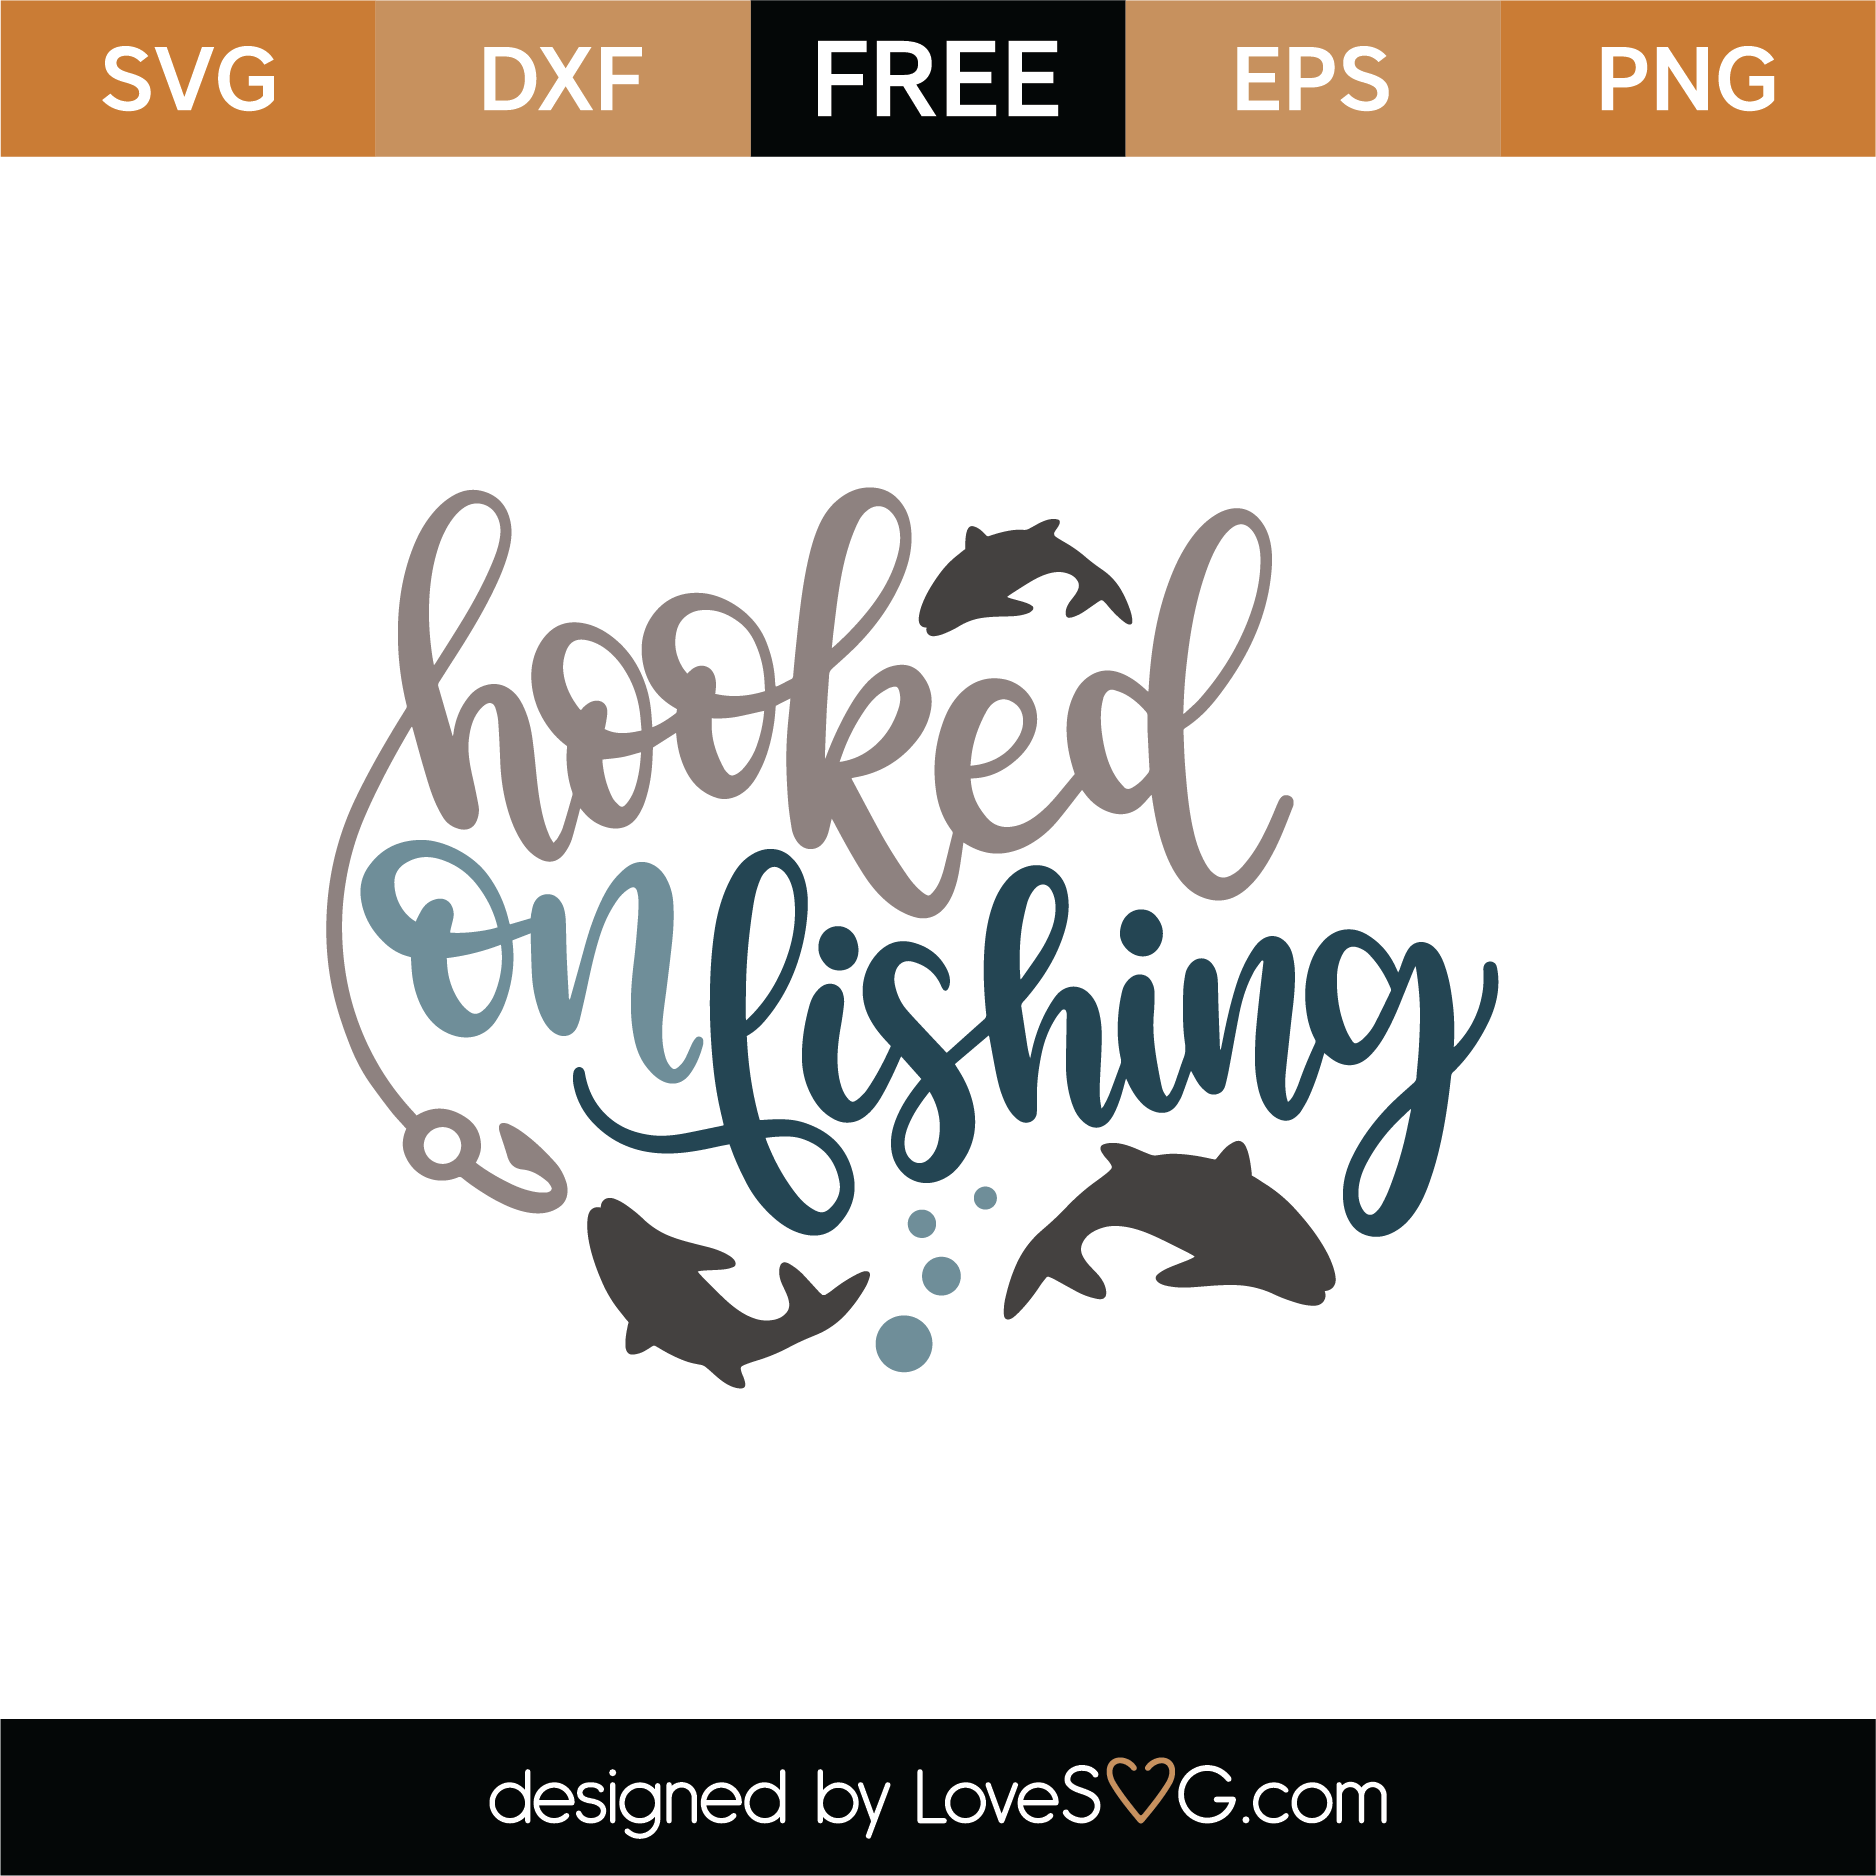 Free Hooked On Fishing SVG Cut File | Lovesvg.com